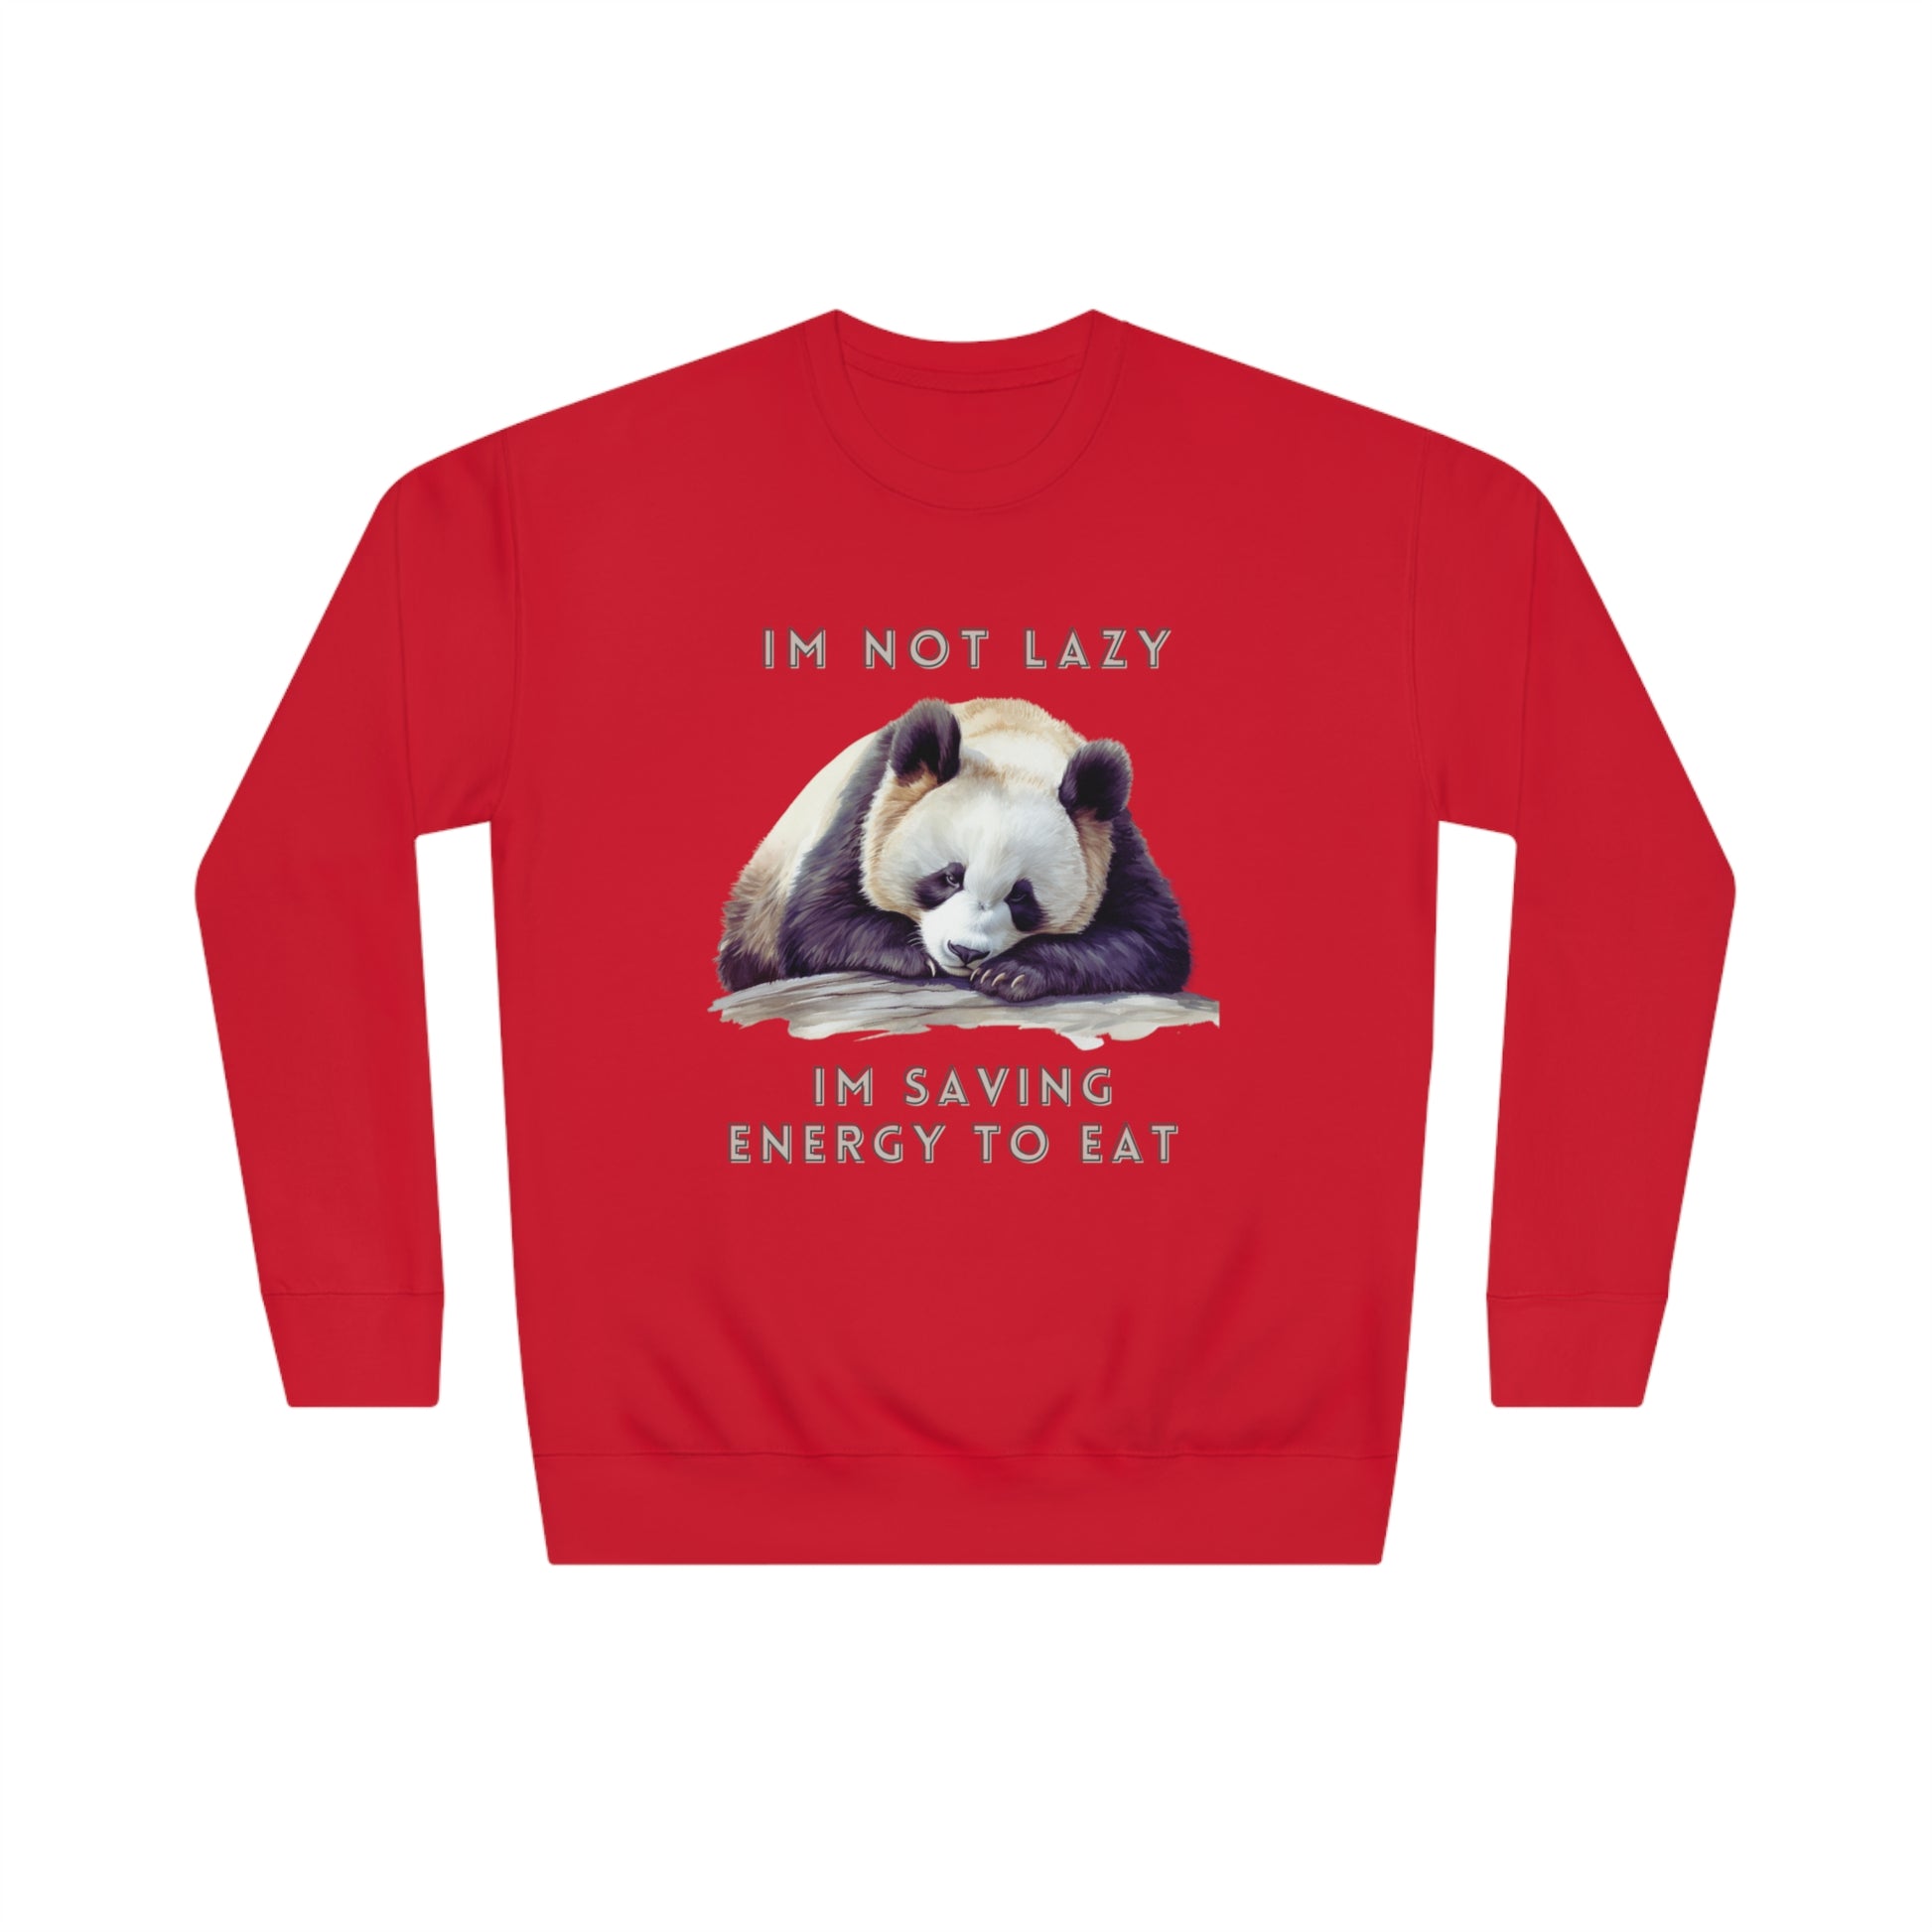 I'm Not Lazy Sweatshirt | Embrace Cozy Relaxation | Funny Panda Sweatshirt | Panda Lover Gift Sweatshirt Team Red S 